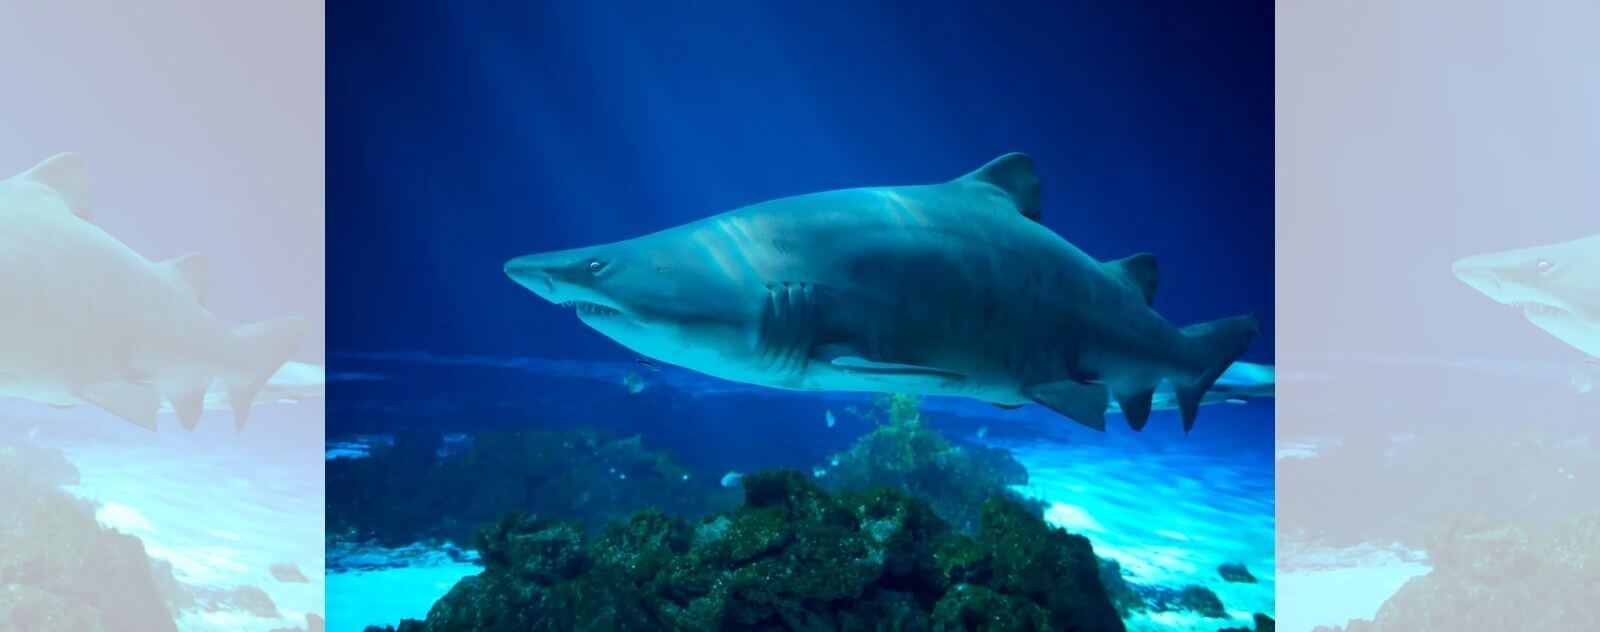 Sand Tiger Shark with Massive Body and Big Teeth